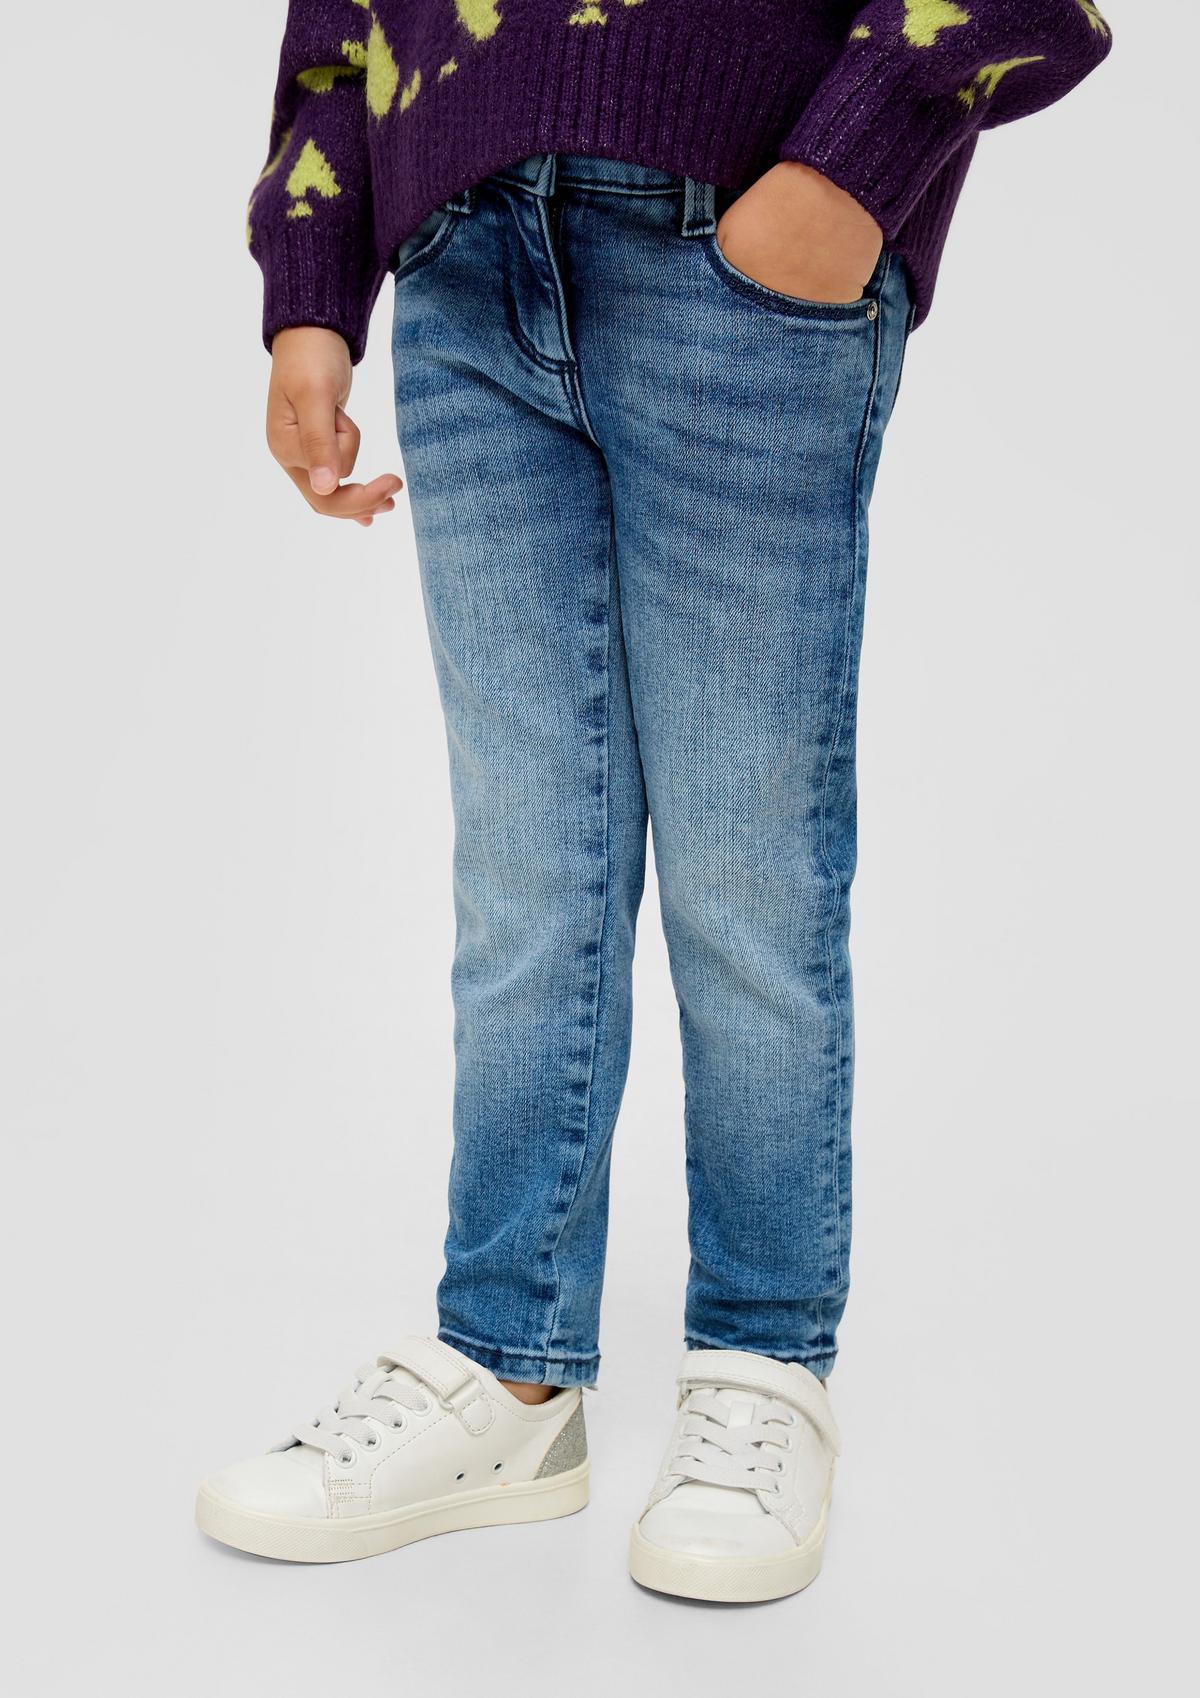 s.Oliver Jeans Kathy / Regular Fit / Mid Rise / Slim Leg